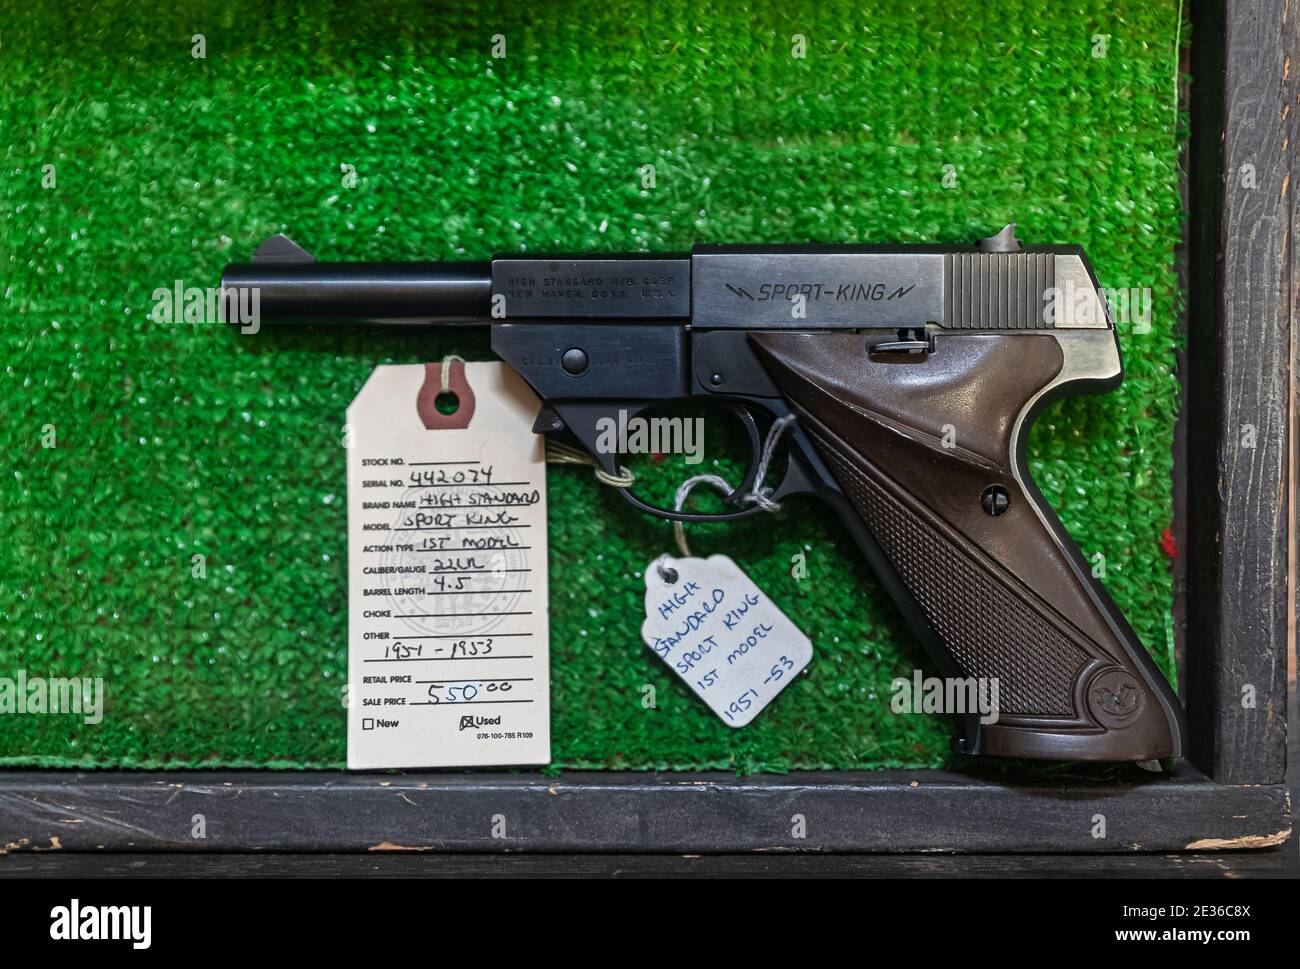 Placerville, USA - November 25, 2020: 1950's classic vintage High Standard Sport King 22 caliber long rifle pistol at a gun shop Stock Photo